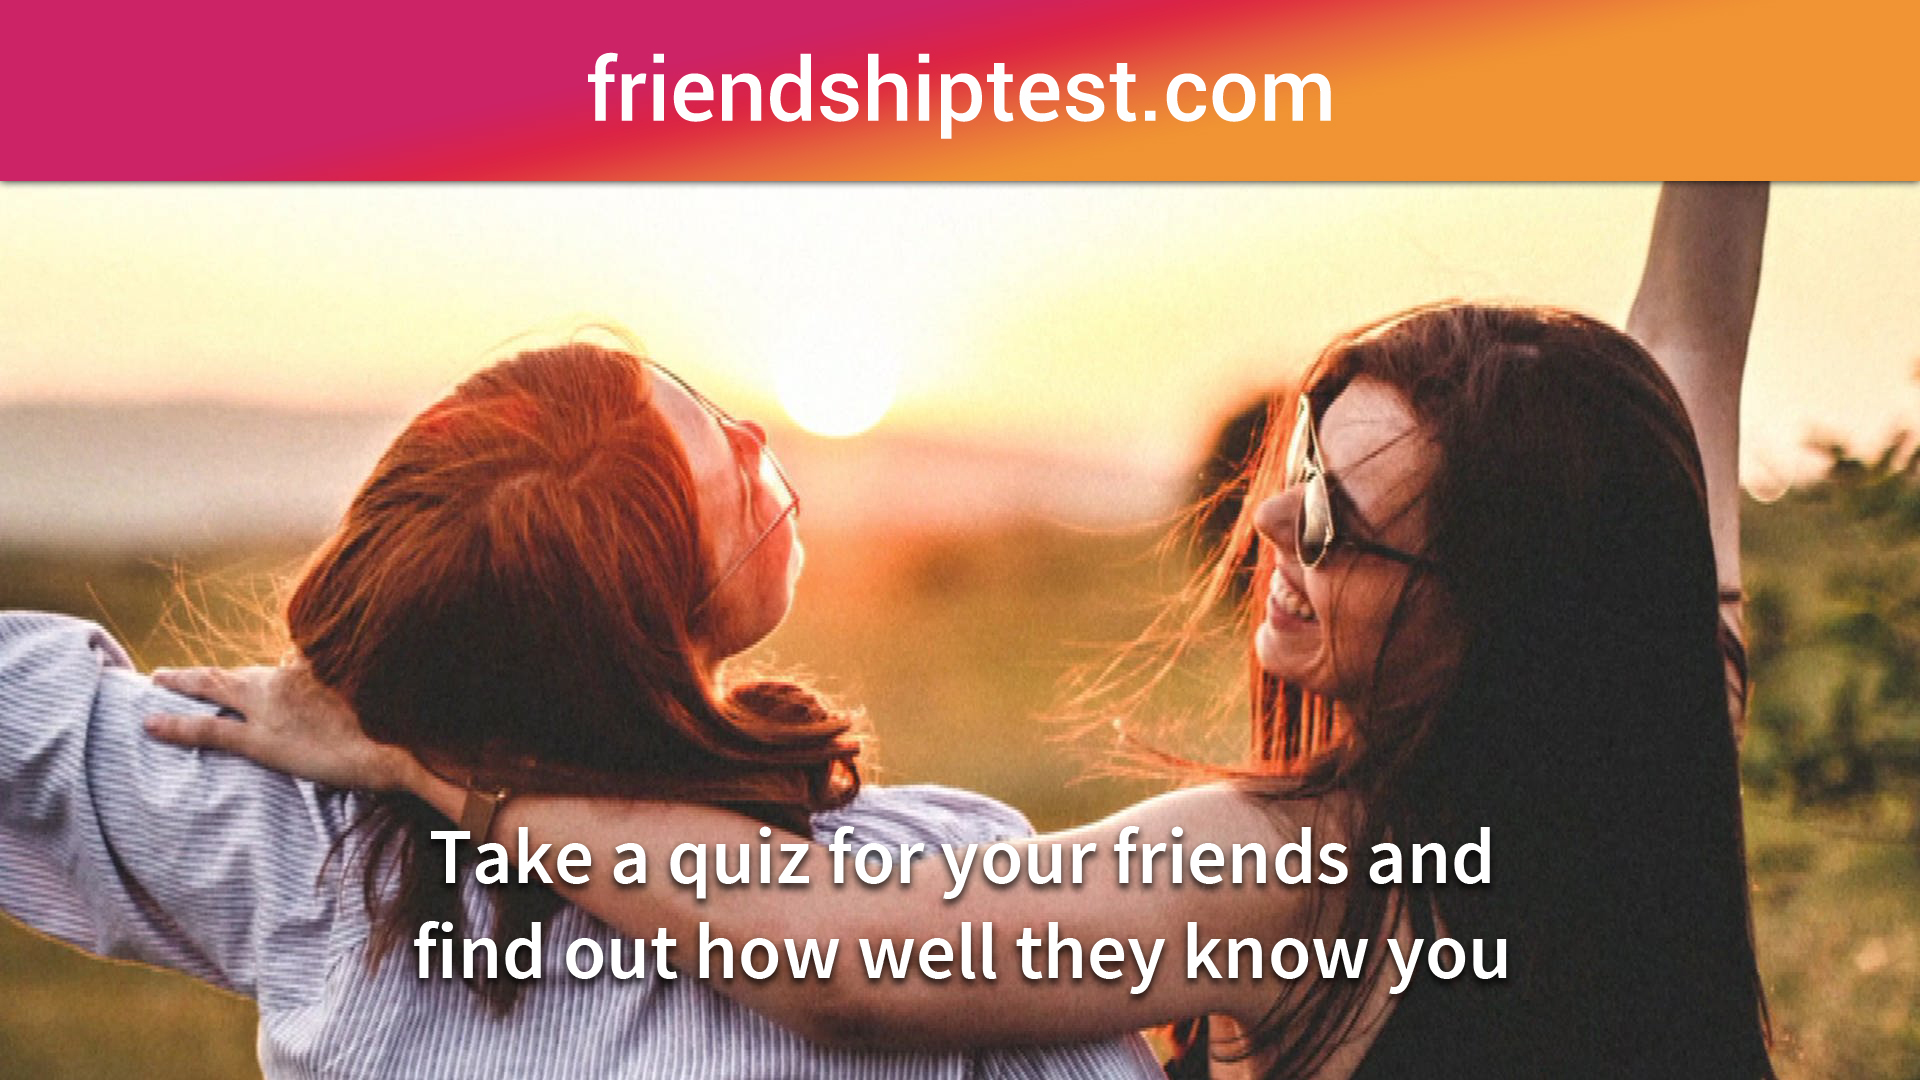 Best Friend Quiz: How much do you know me? Friendship test